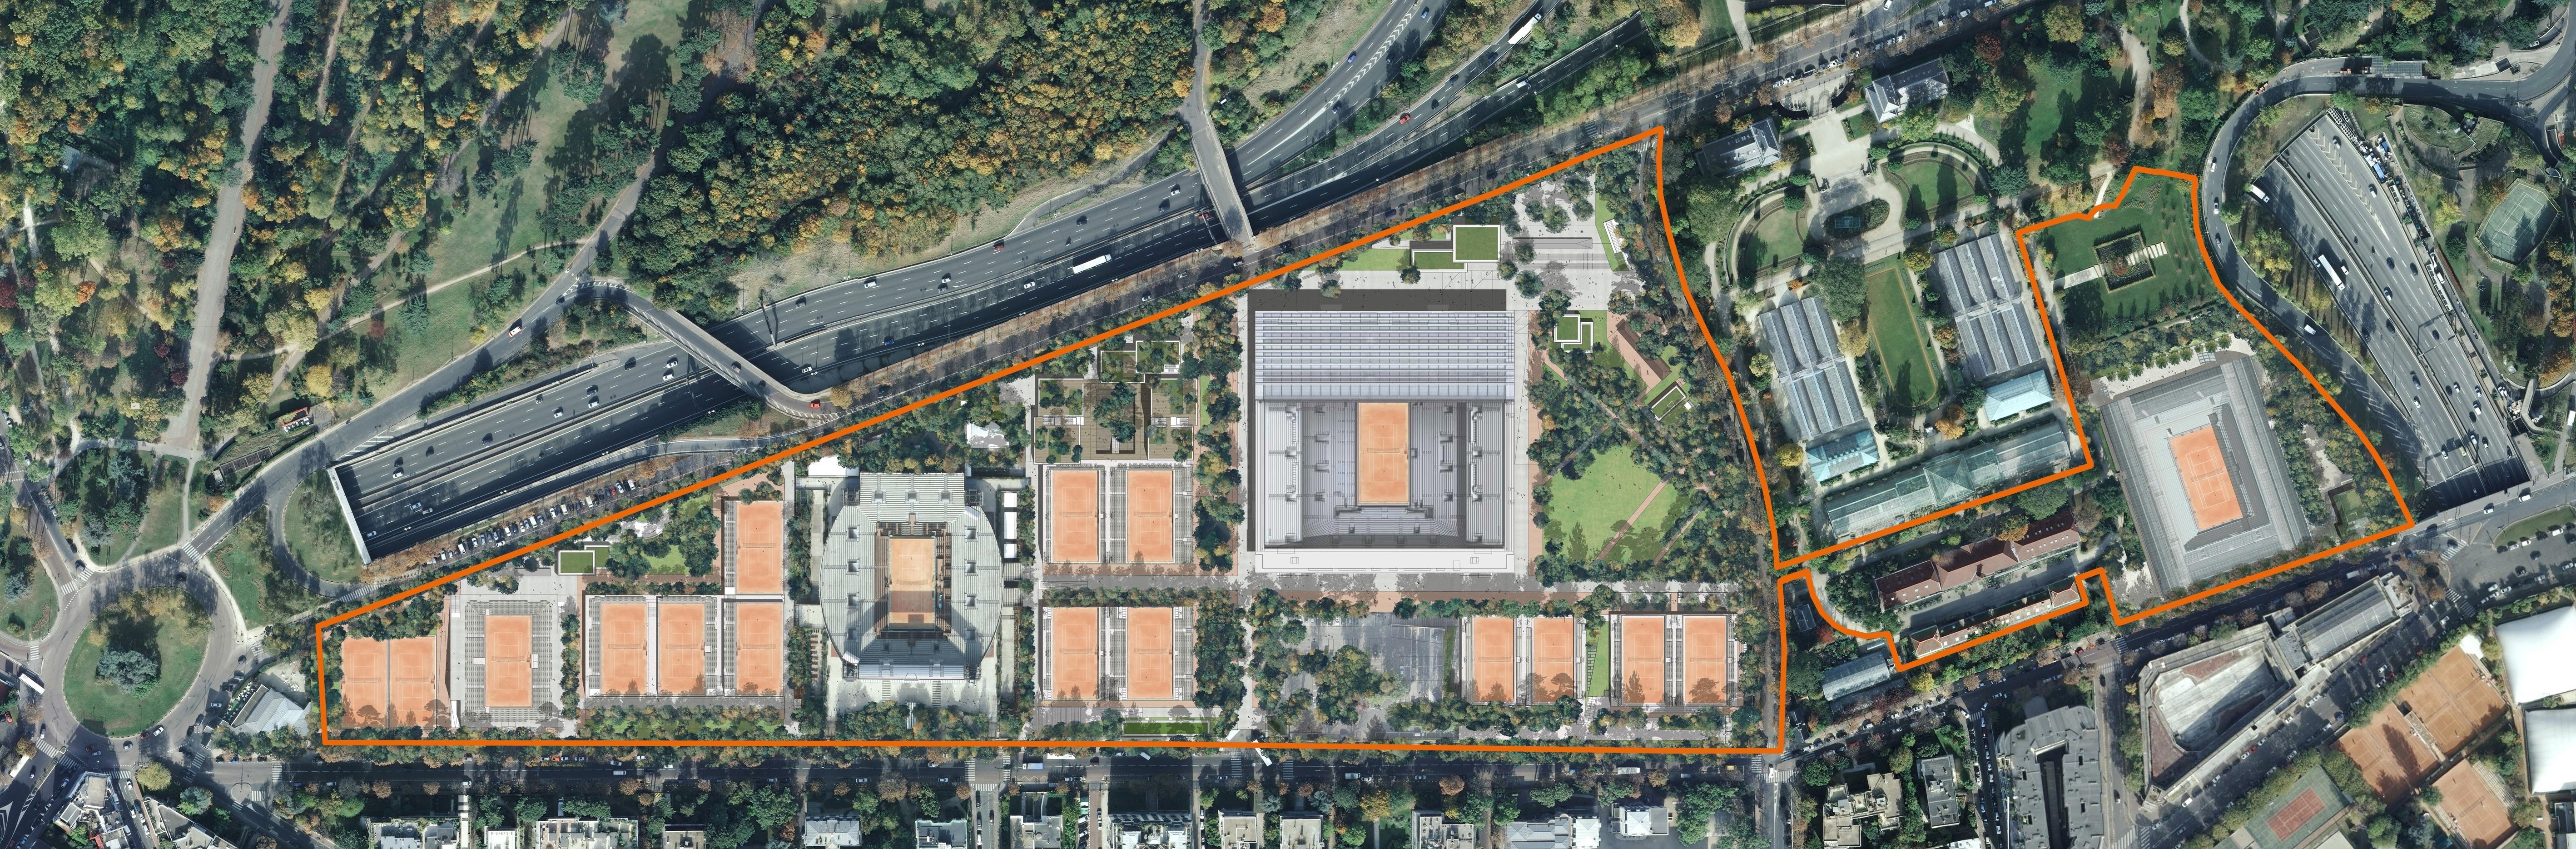 Stade Roland-Garros en 2021 en configuration tourno